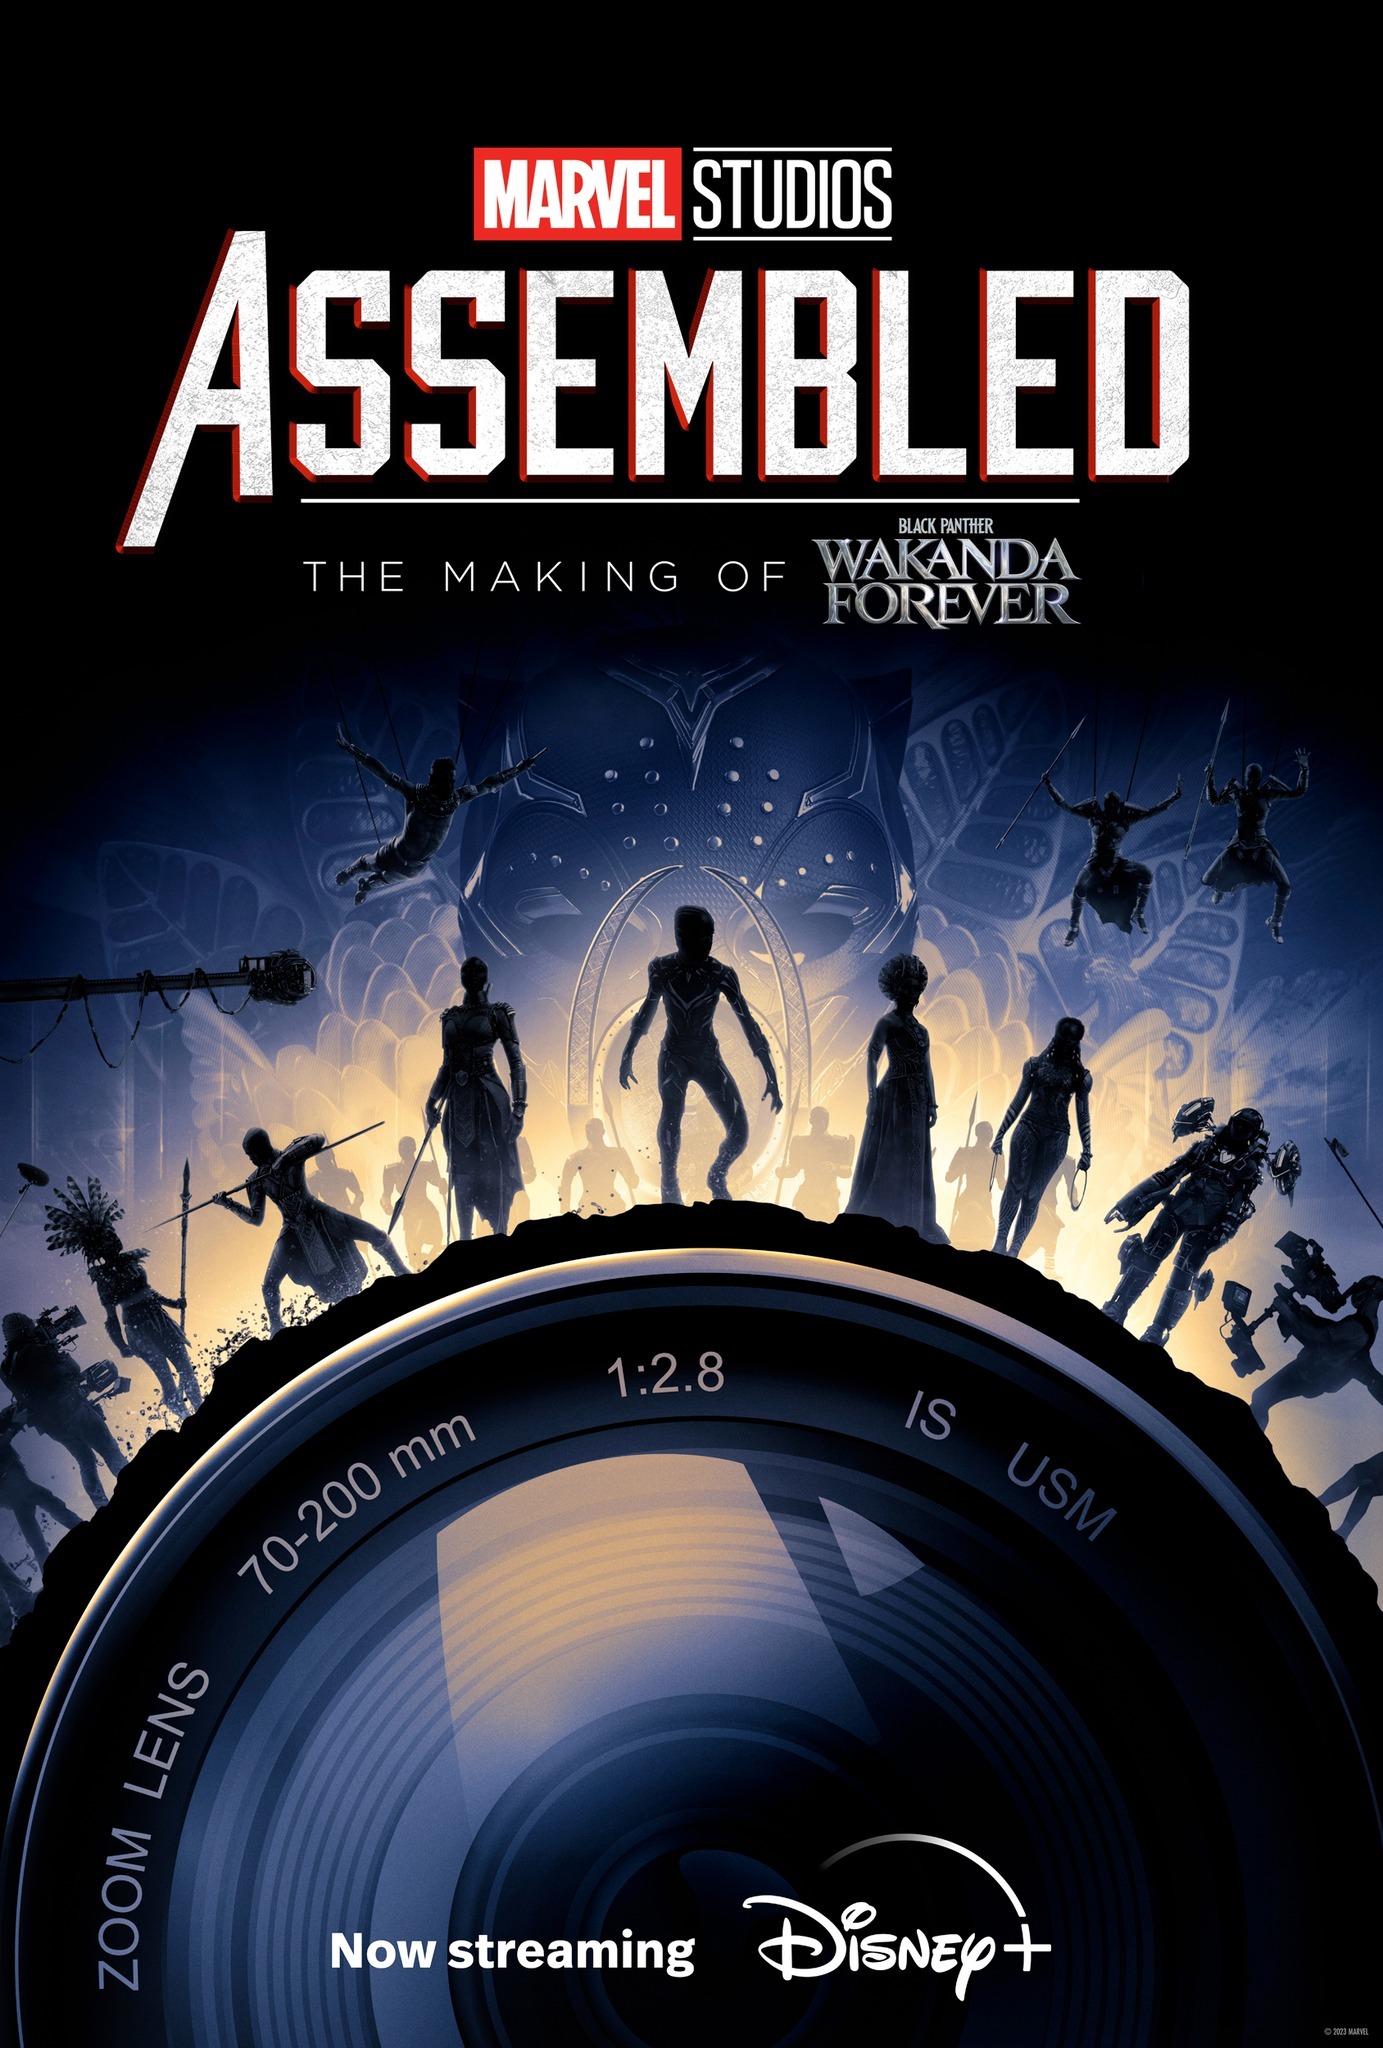 Mega Sized TV Poster Image for Marvel Studios: Assembled (#14 of 20)